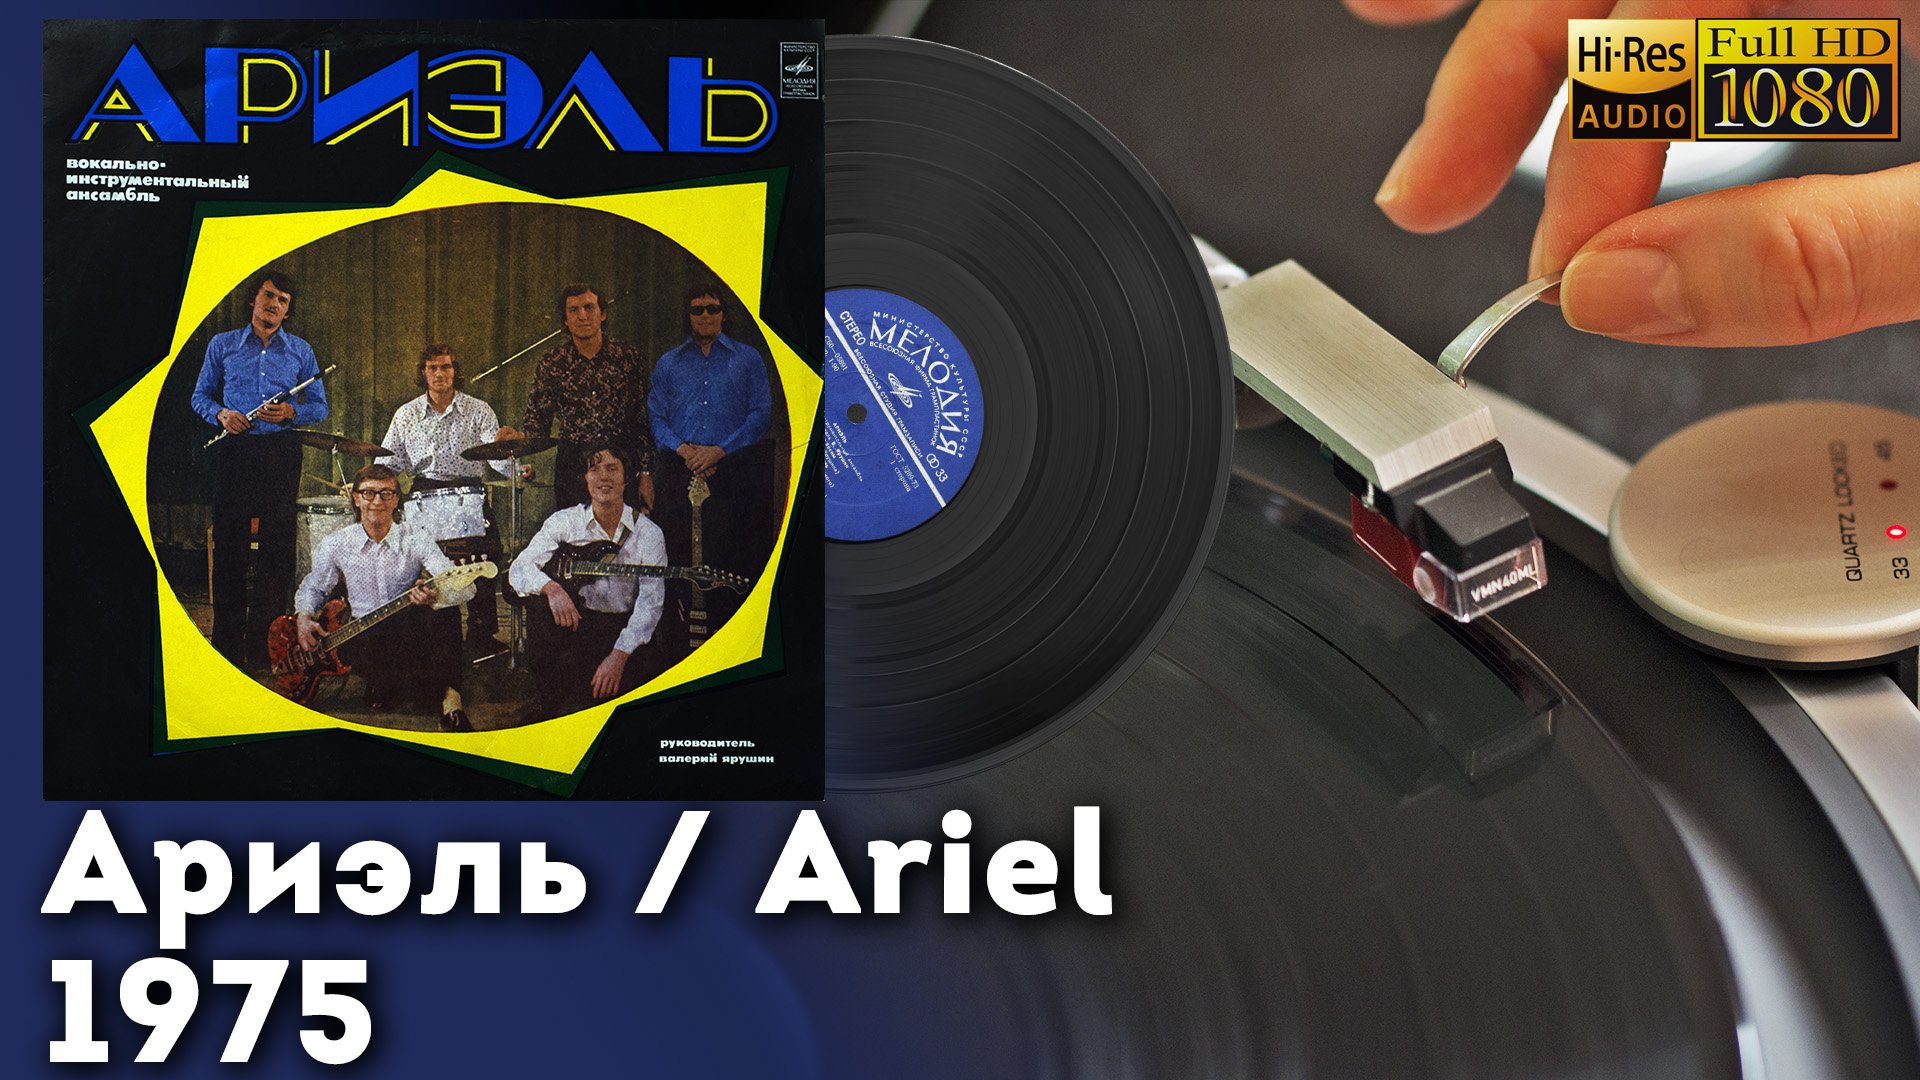 Ариэль / Ariel, 1975 Soviet rock, pop, folk, Vinyl video 4K, 24bit/96kHz